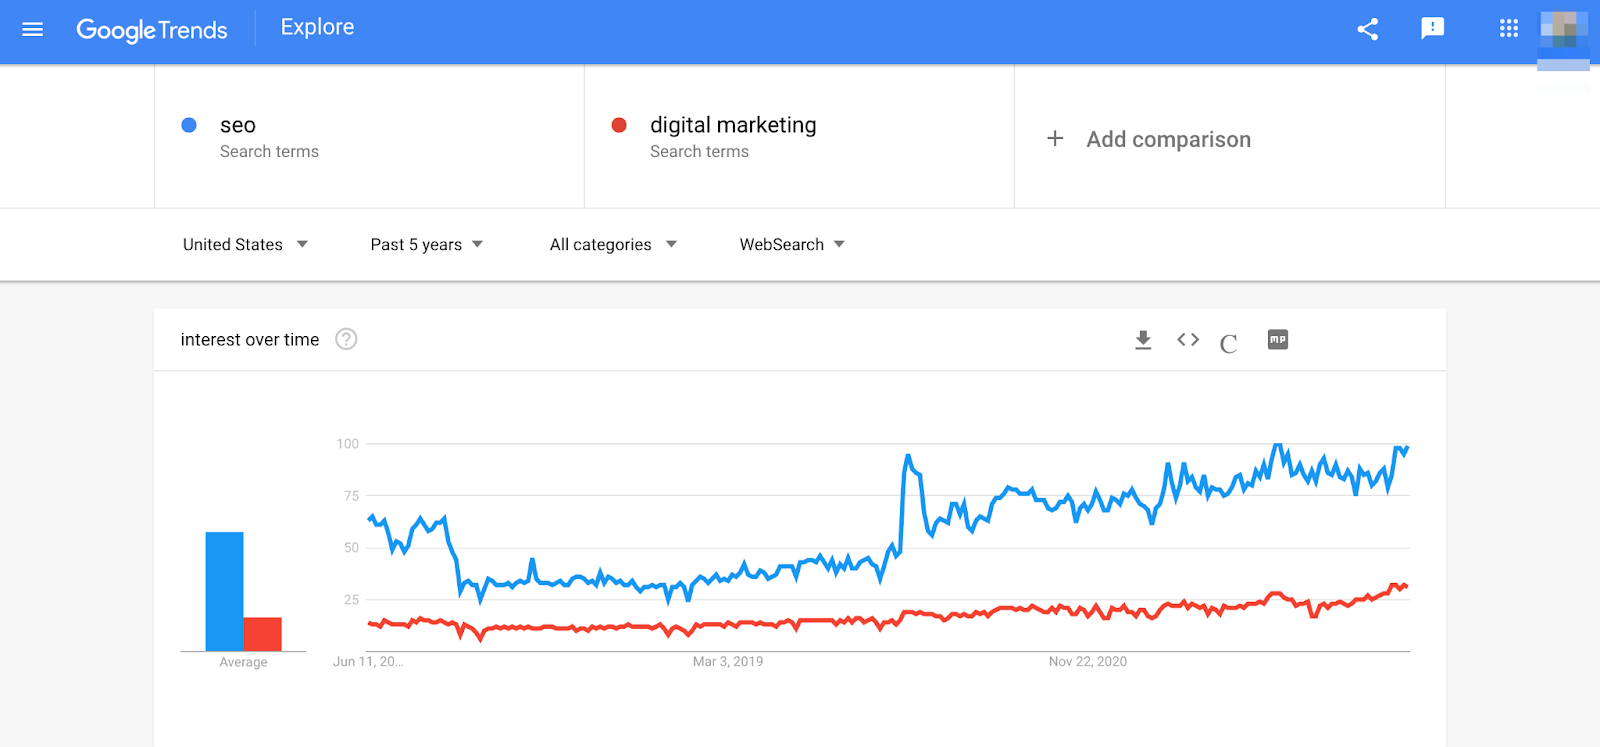 Seo trends vs digital marketing trends in google trends website